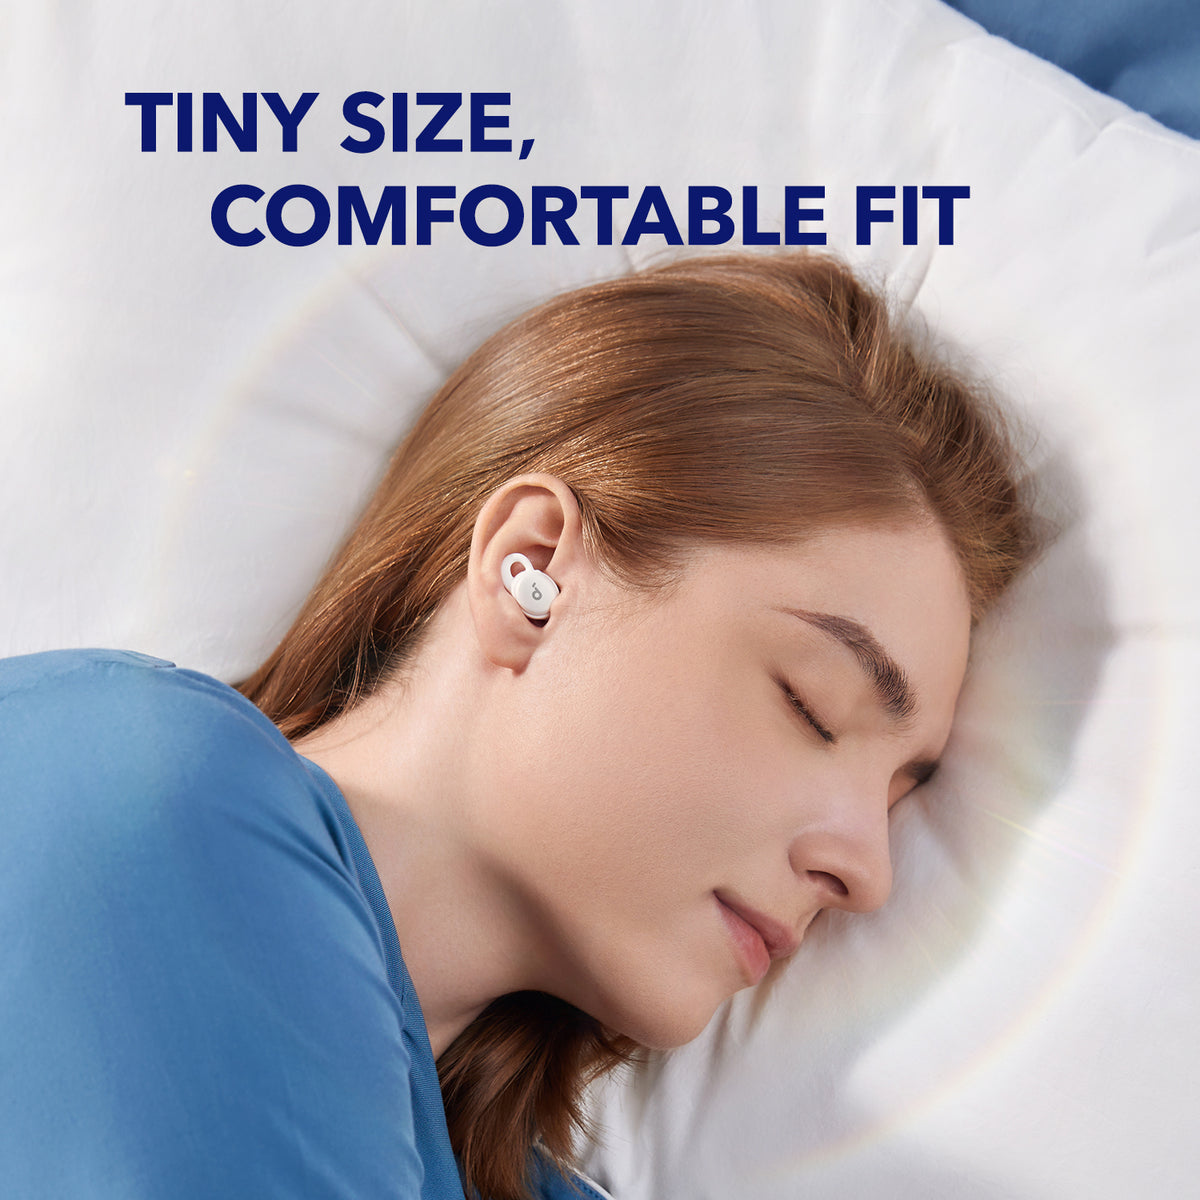 Better Sleep Bluetooth Sleeping Mask with Wireless Earphones, Shop Today.  Get it Tomorrow!